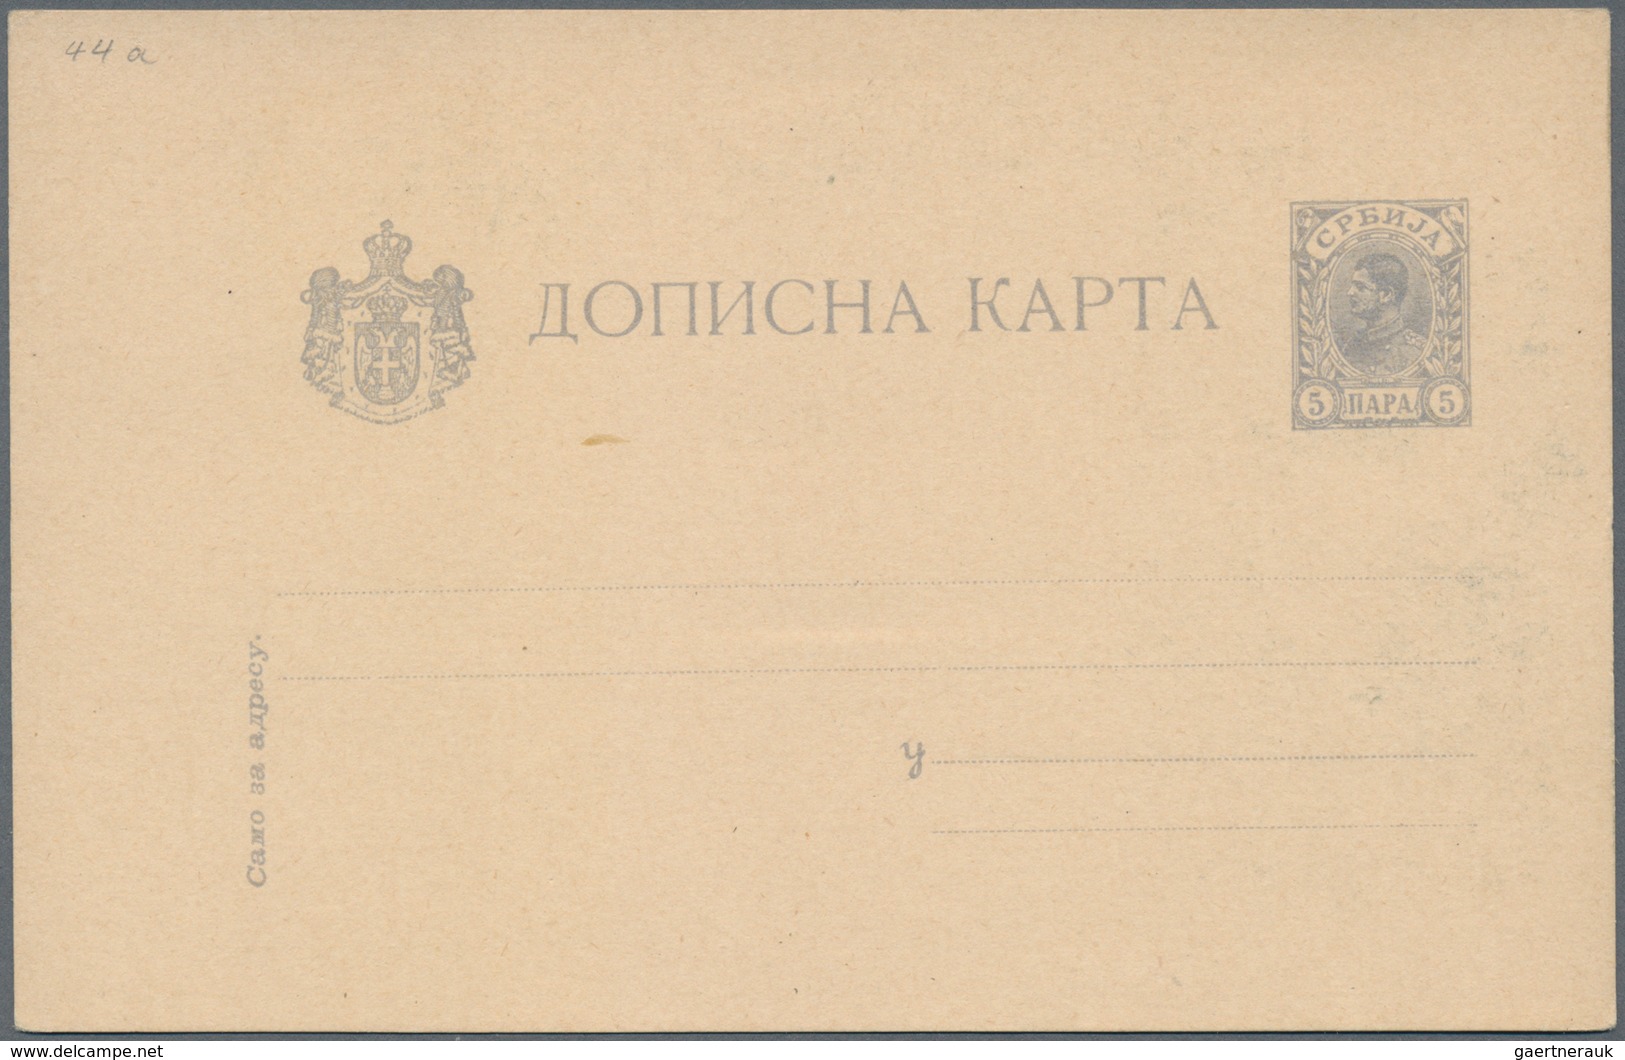 Serbien - Ganzsachen: 1895, 5 Pa Ultramarine Postal Stationery Card In Two Types, Unused - Servië